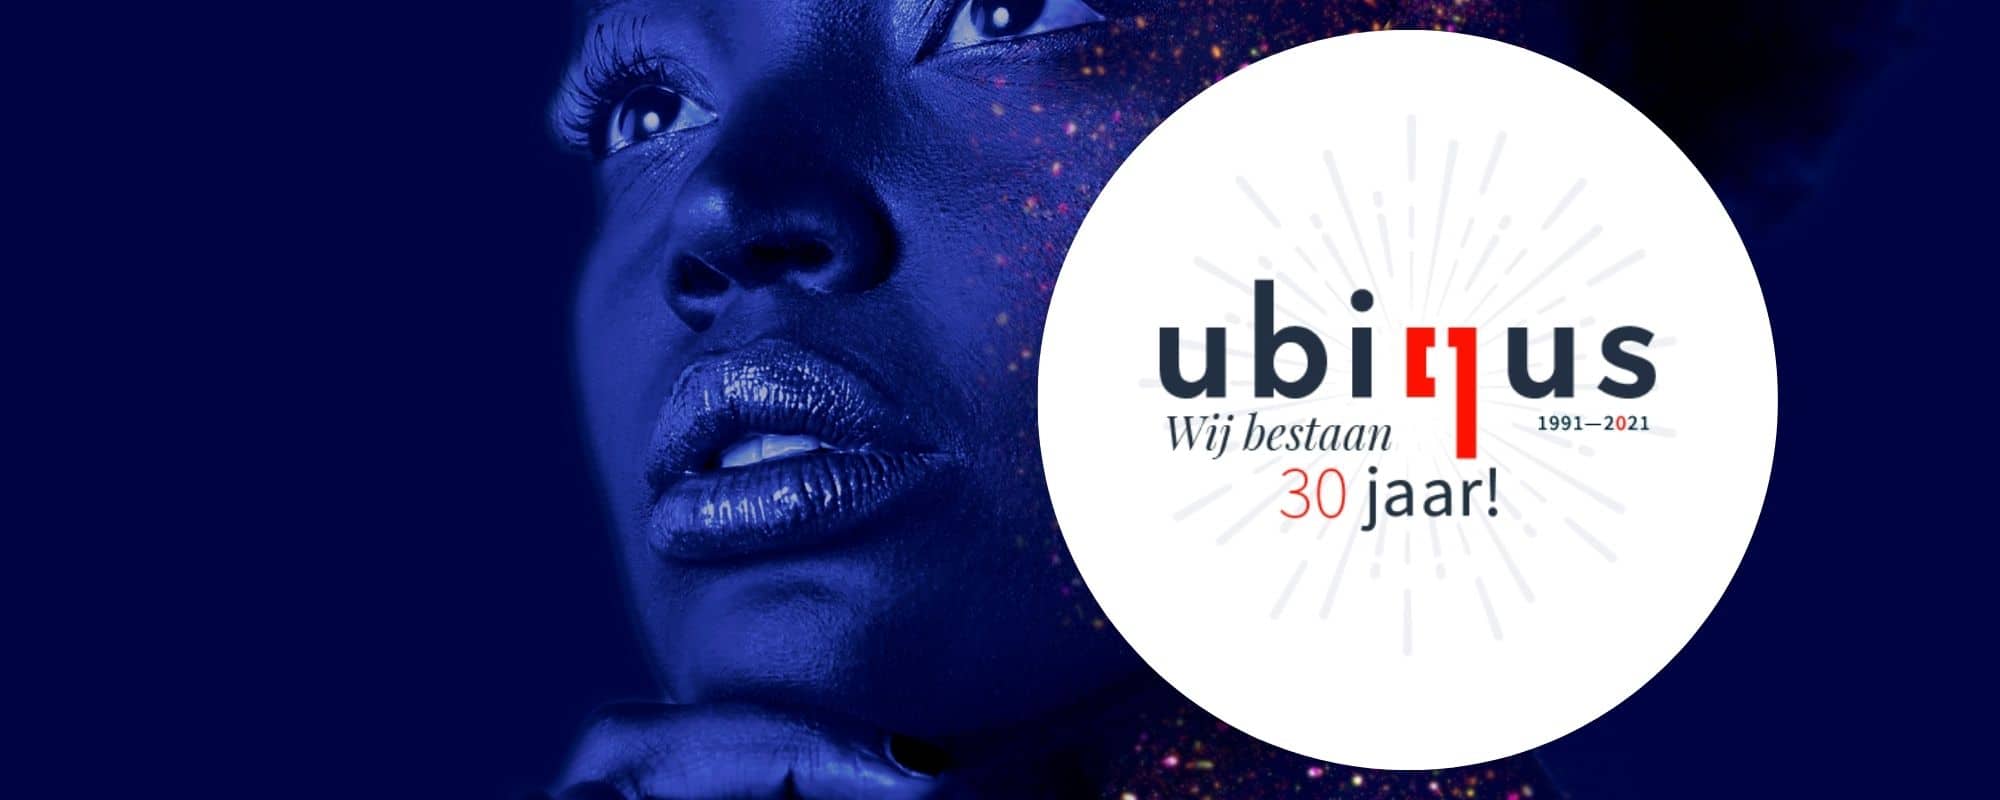 Ubiqus wordt 30!